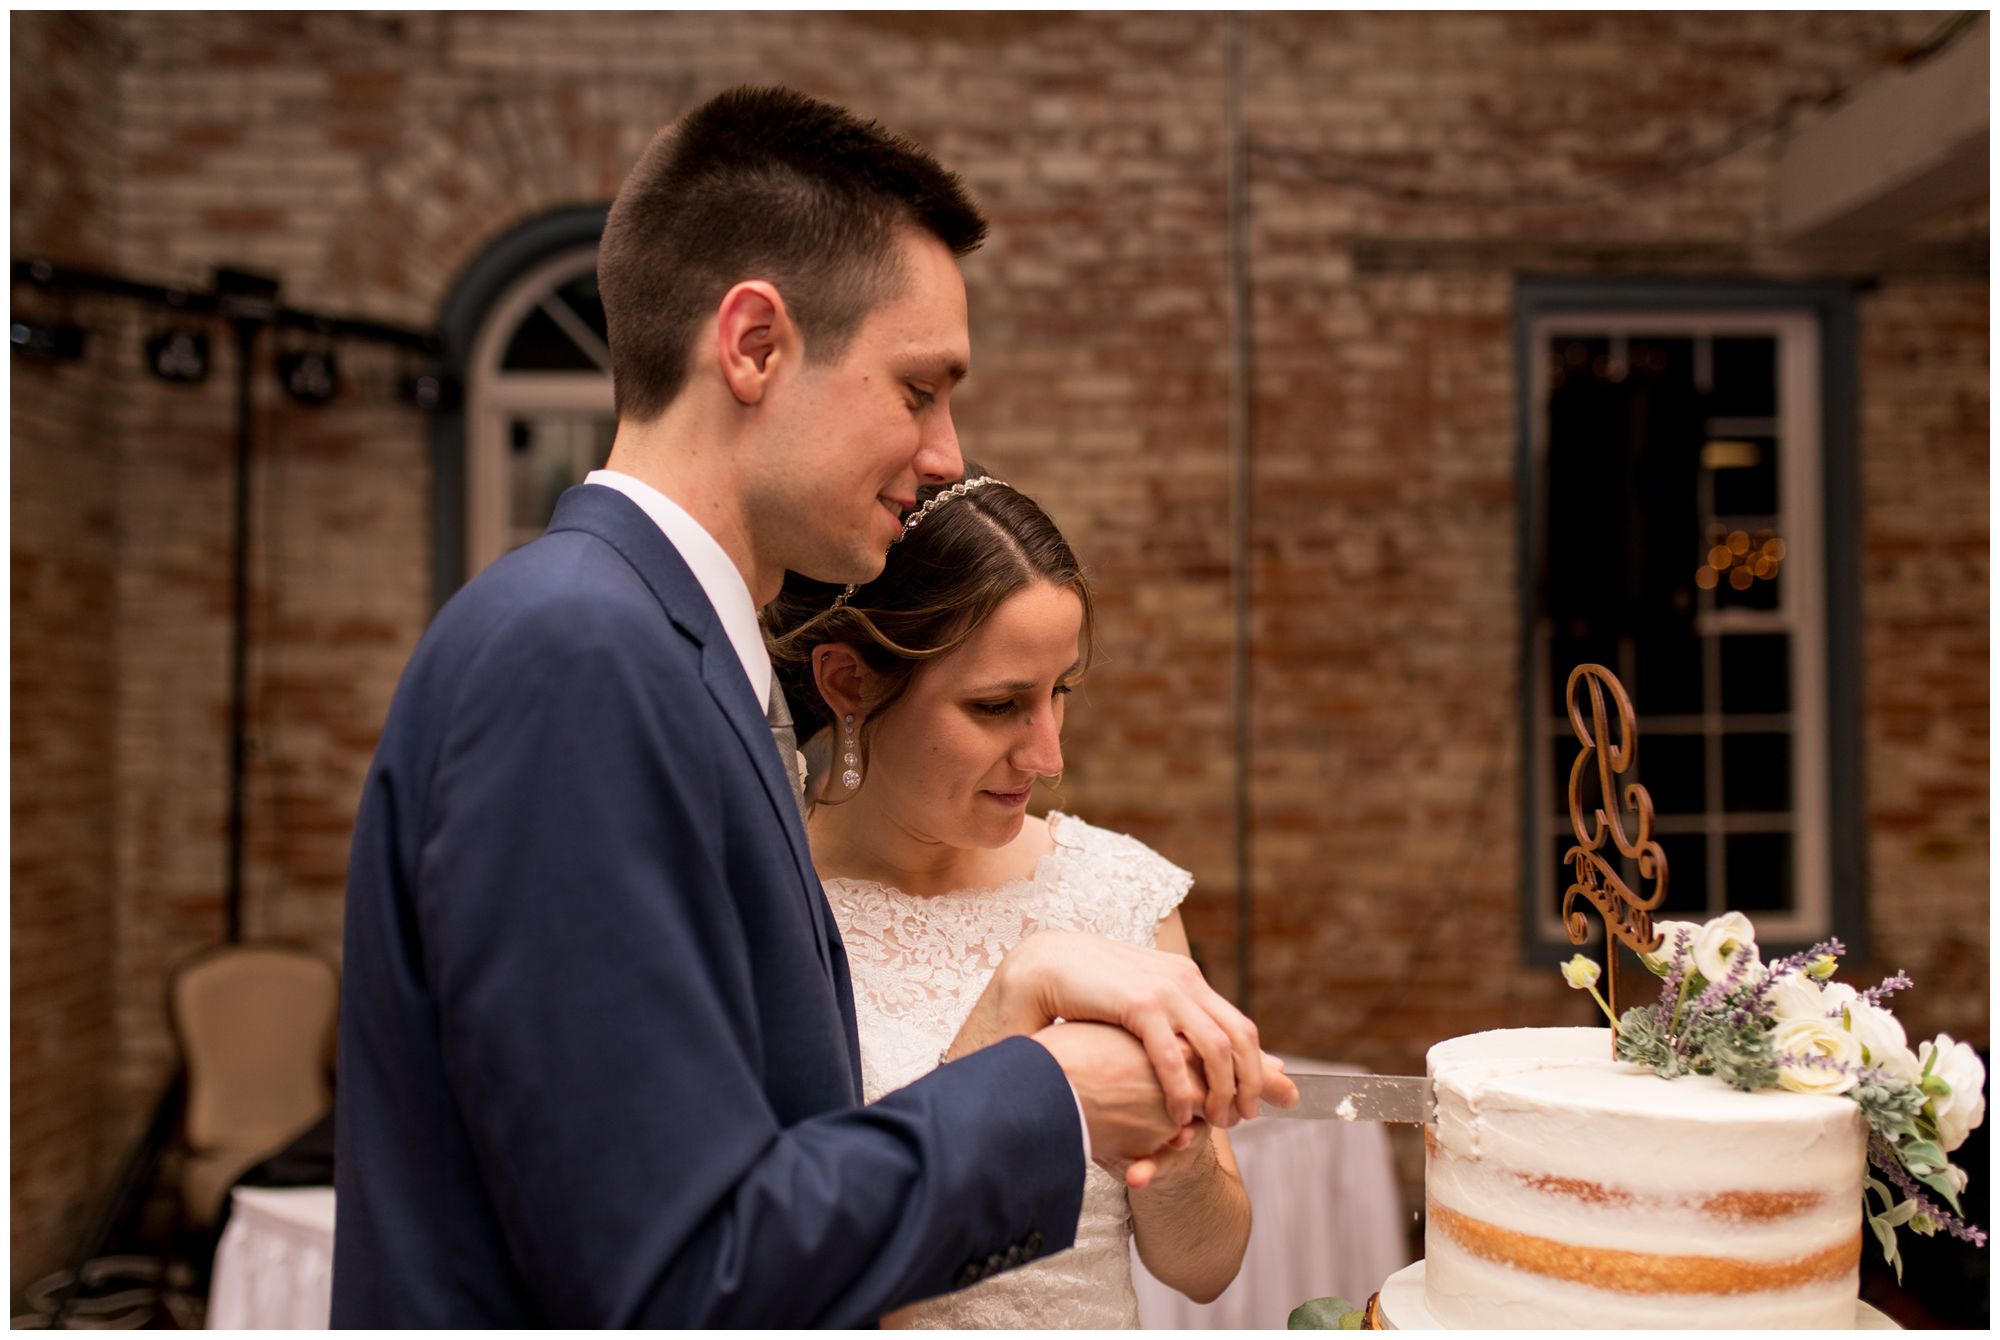 bride and groom cut wedding cake together